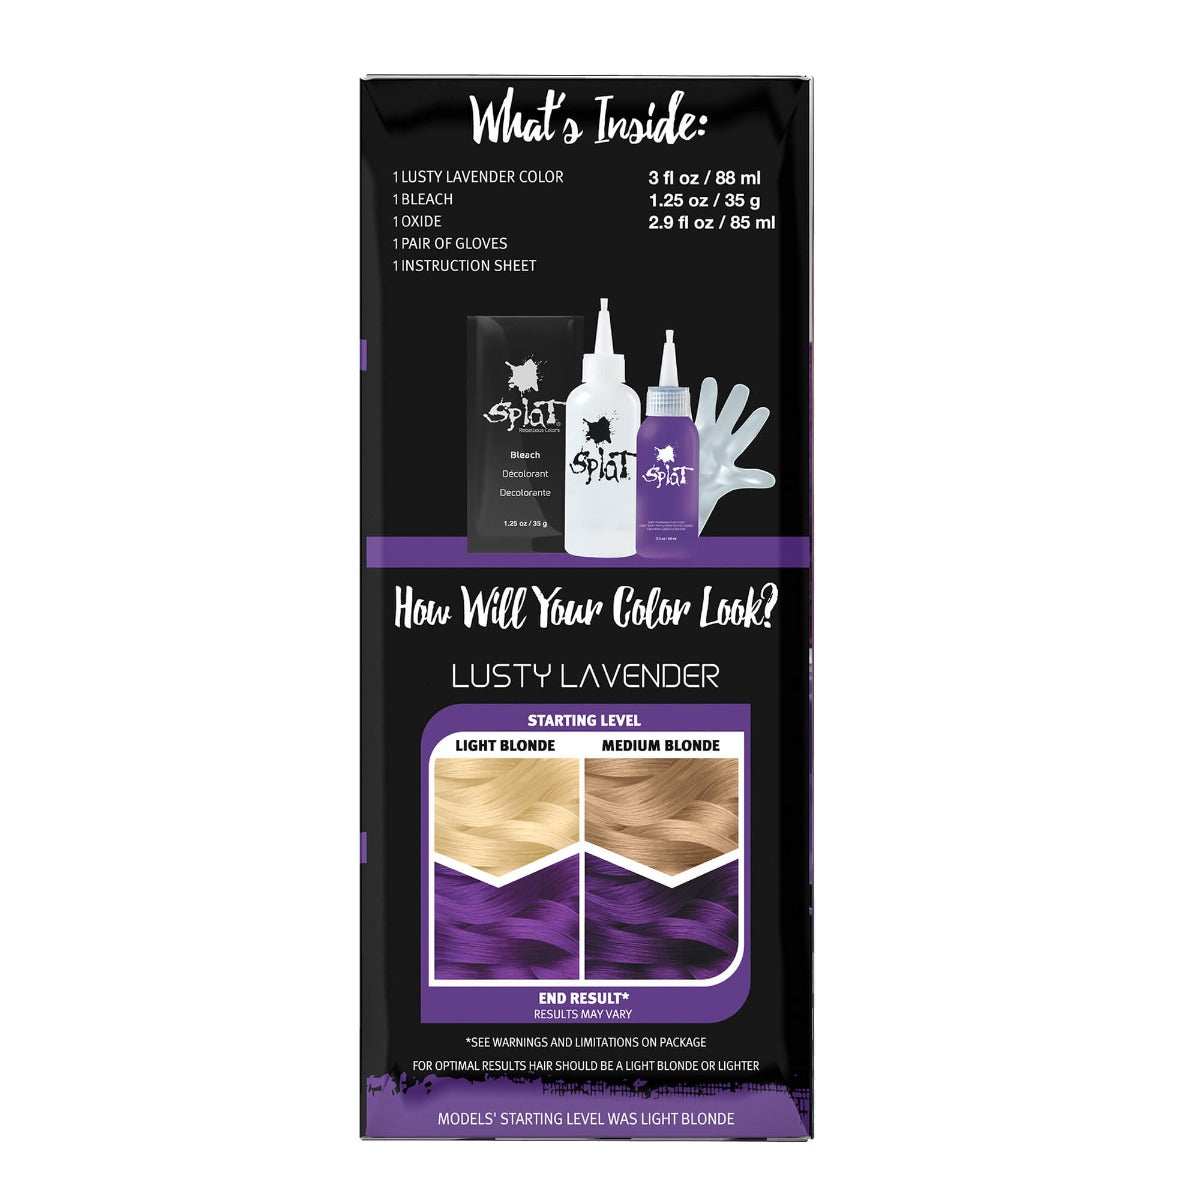 Lusty Lavender: Original Lavender Semi-Permanent Hair Dye Complete Kit with Bleach